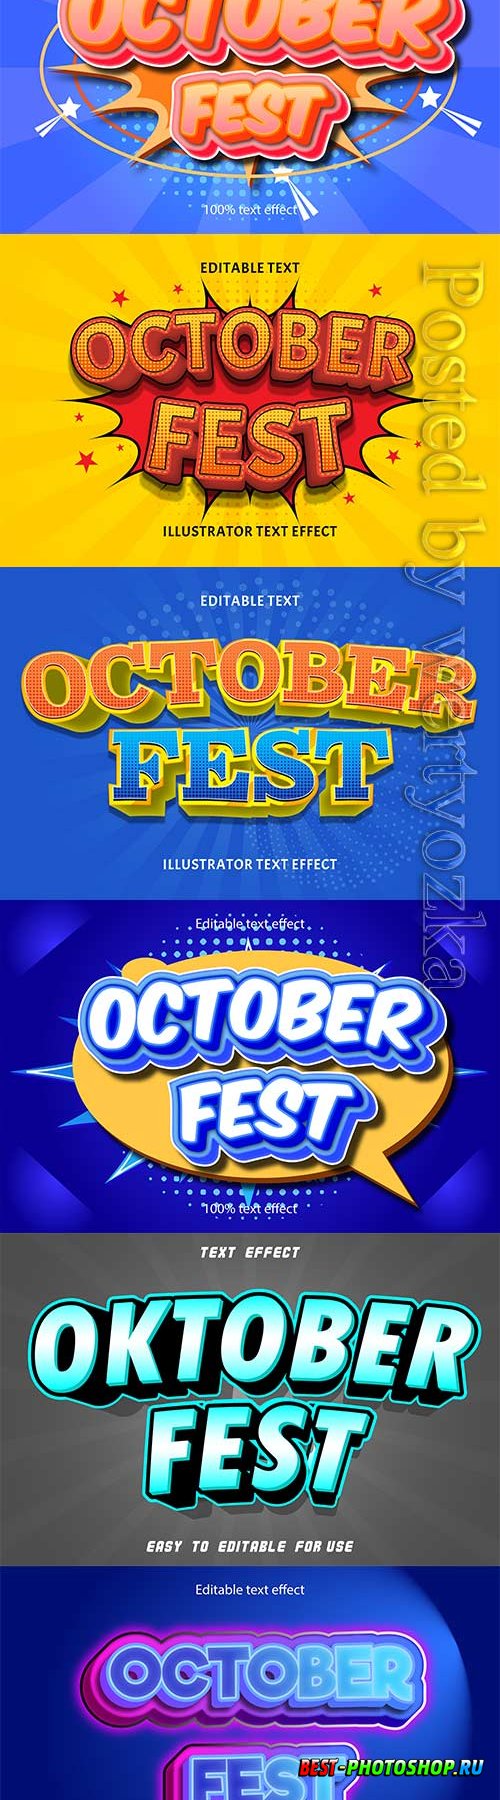 October fest editable text effect vol 7